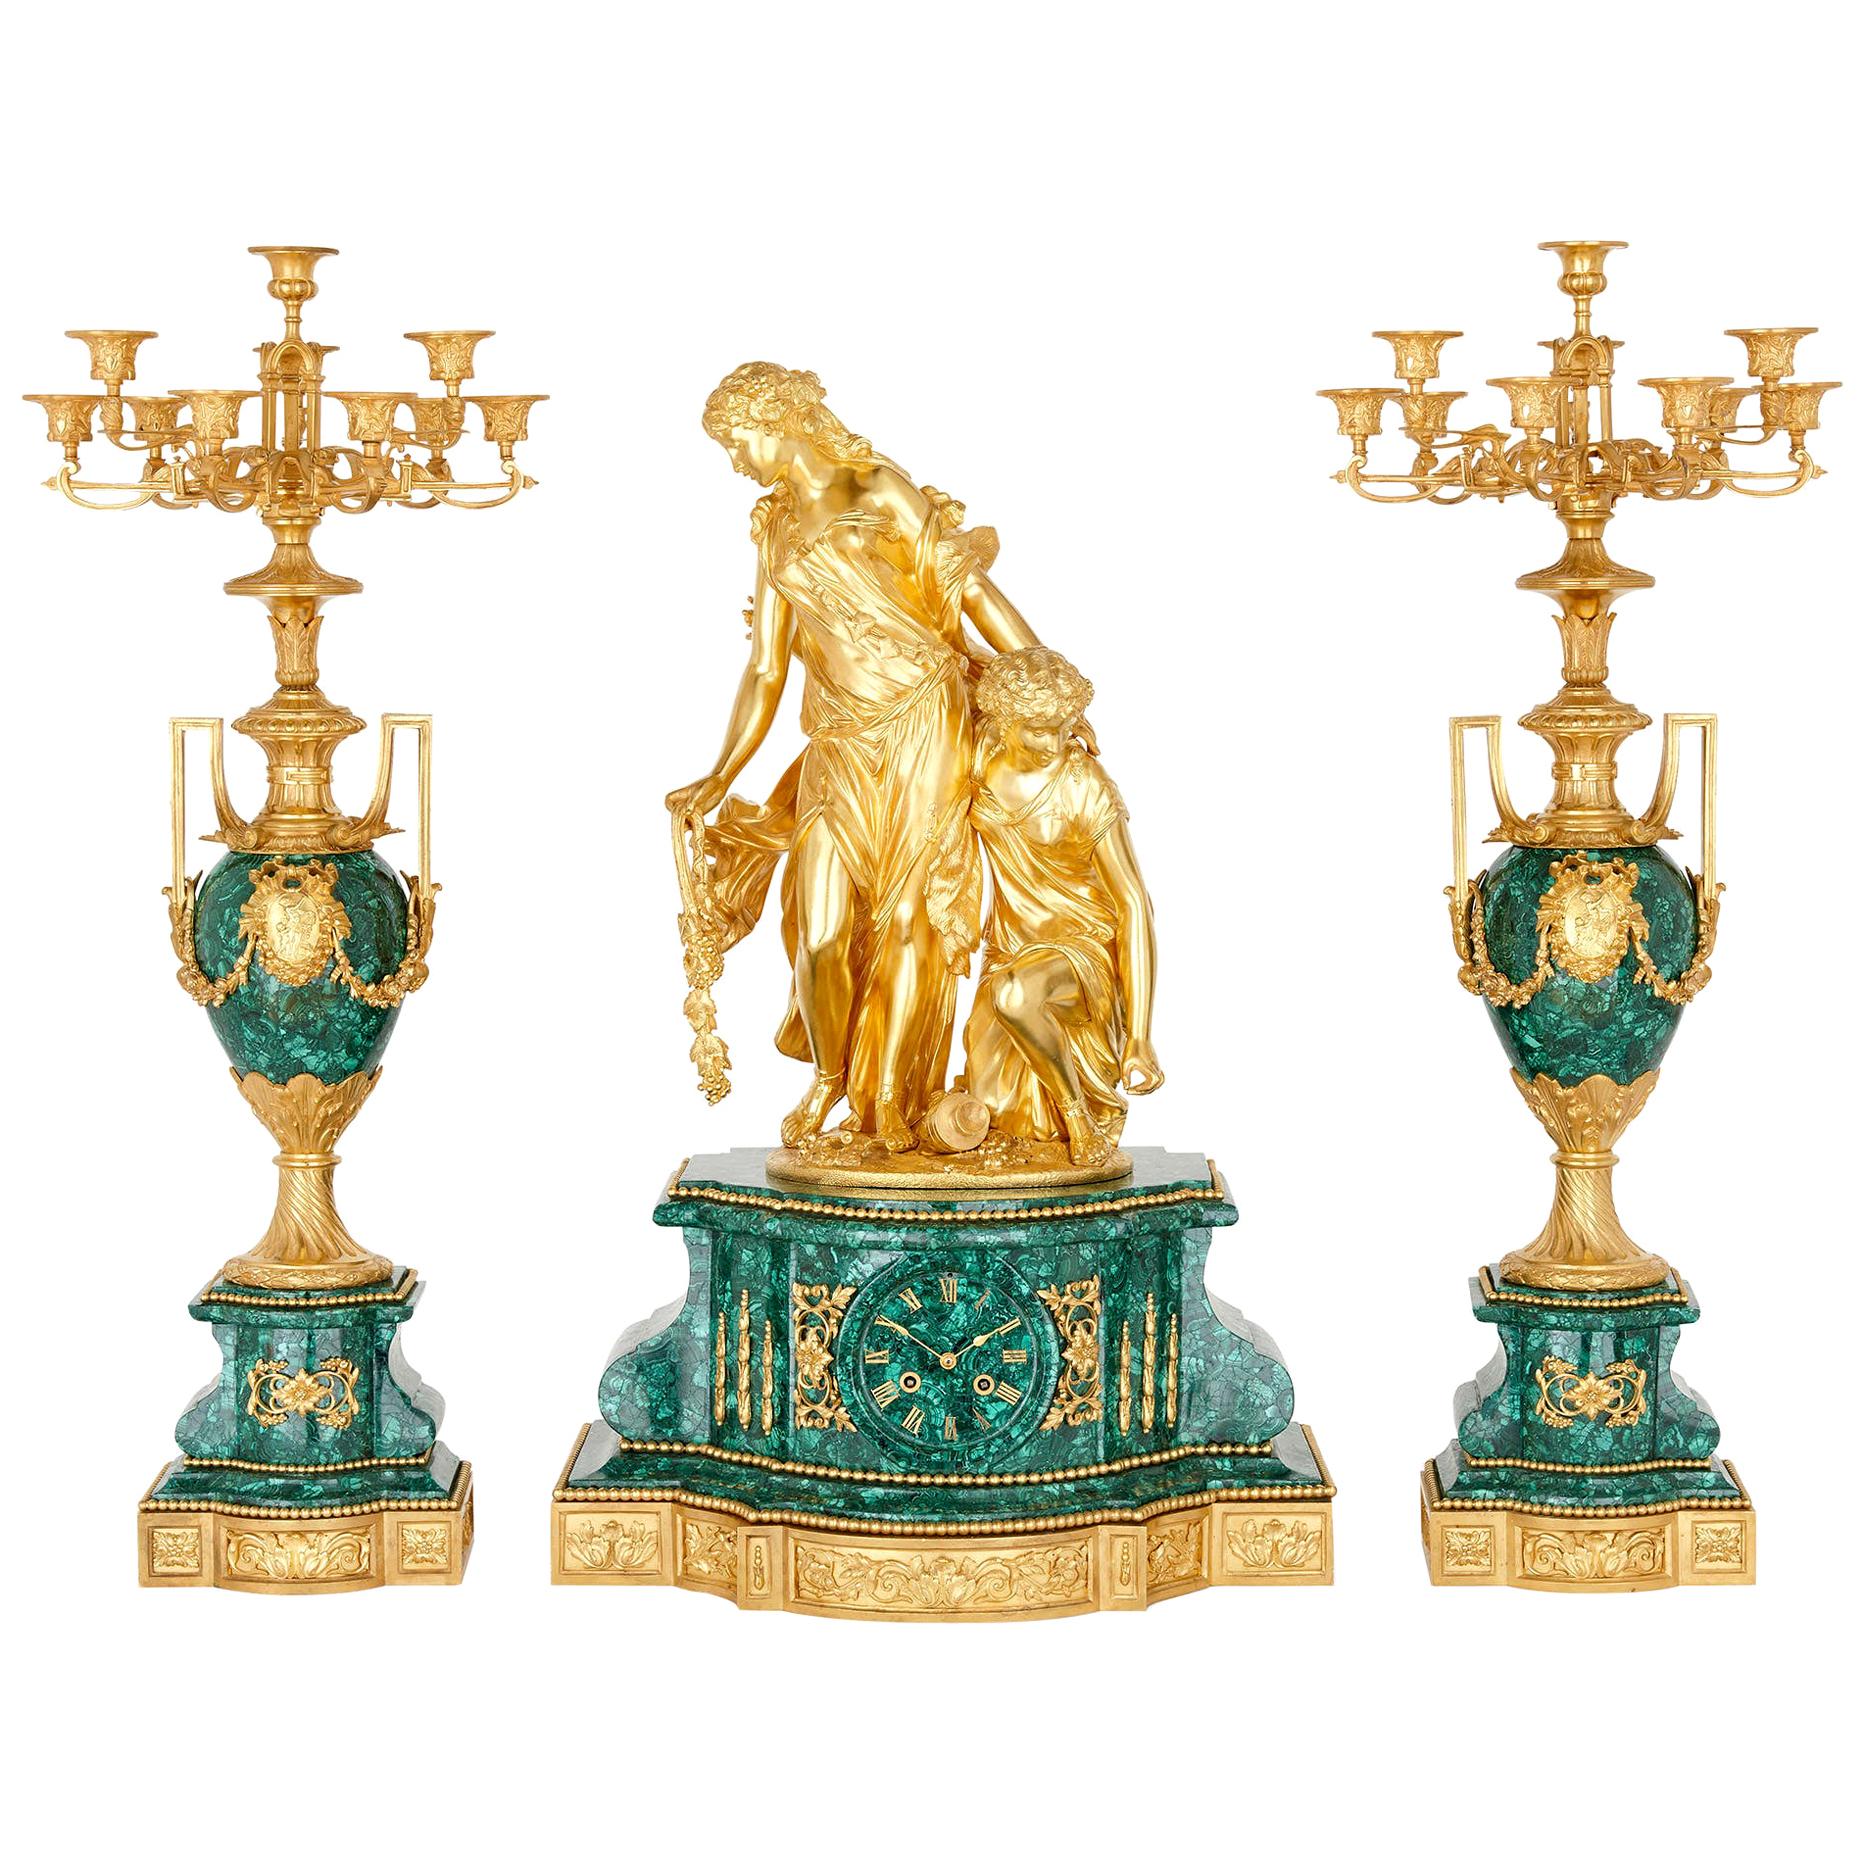 Napoleon III Period Neoclassical Malachite and Gilt Bronze Clock Set by Picard